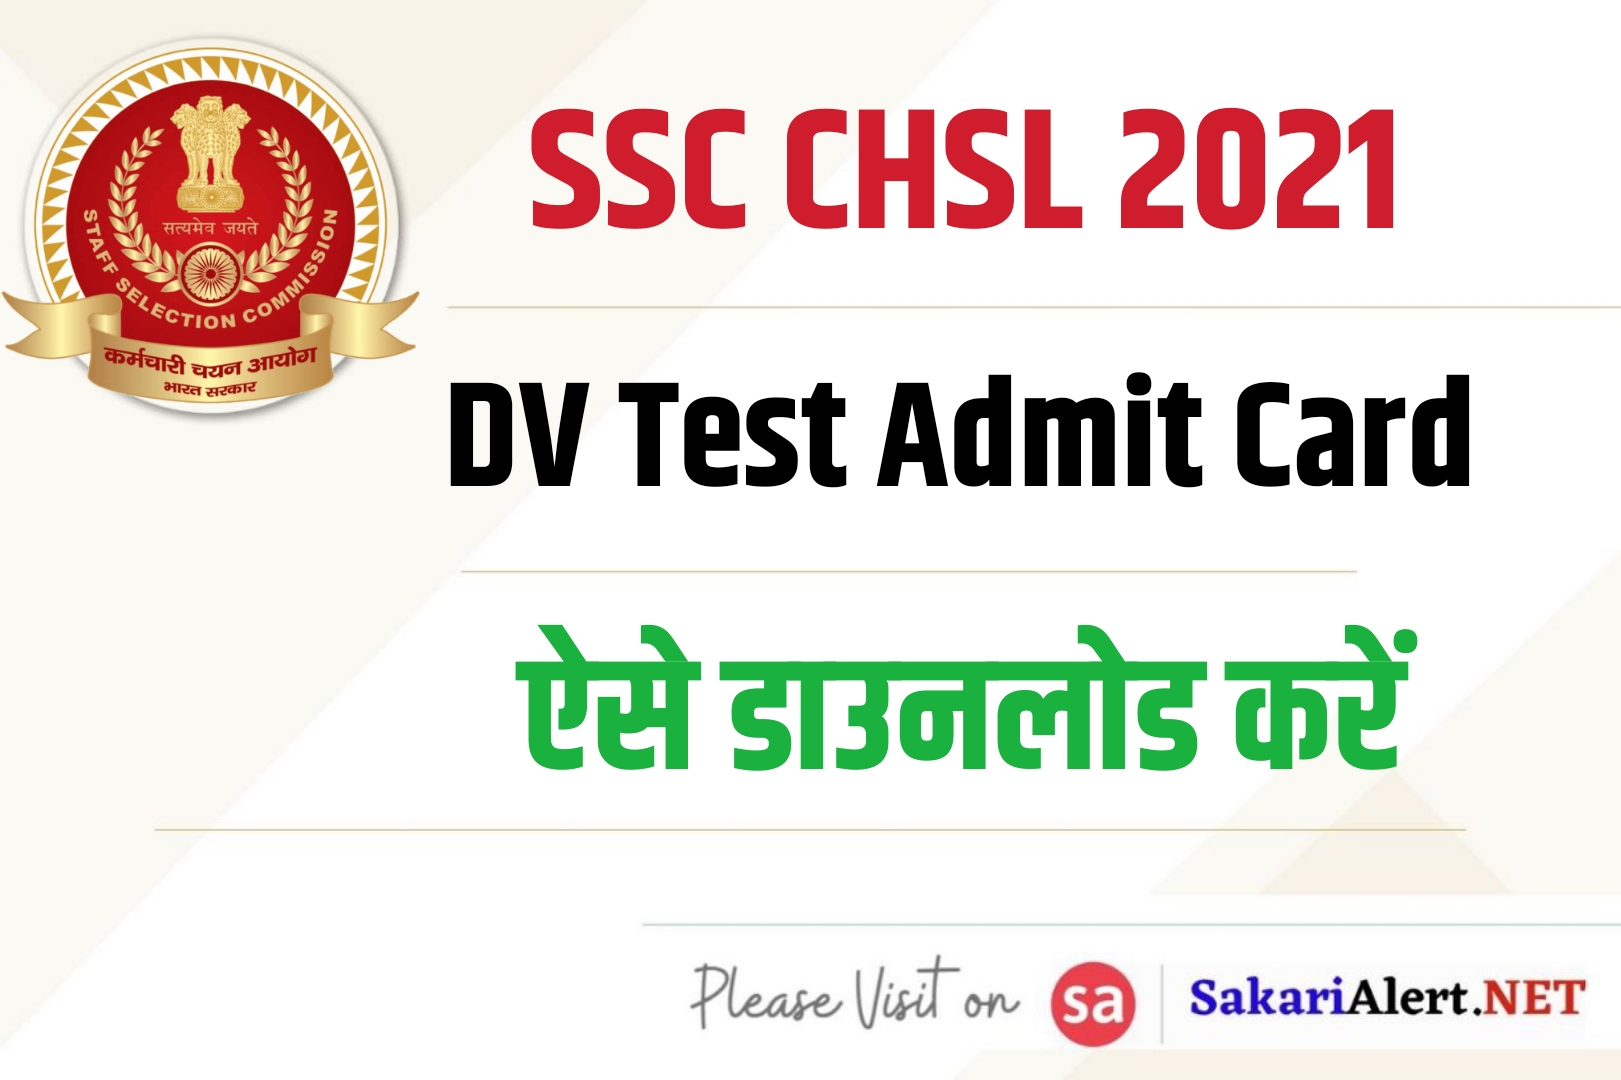 SSC CHSL 2021 DV Test Admit Card